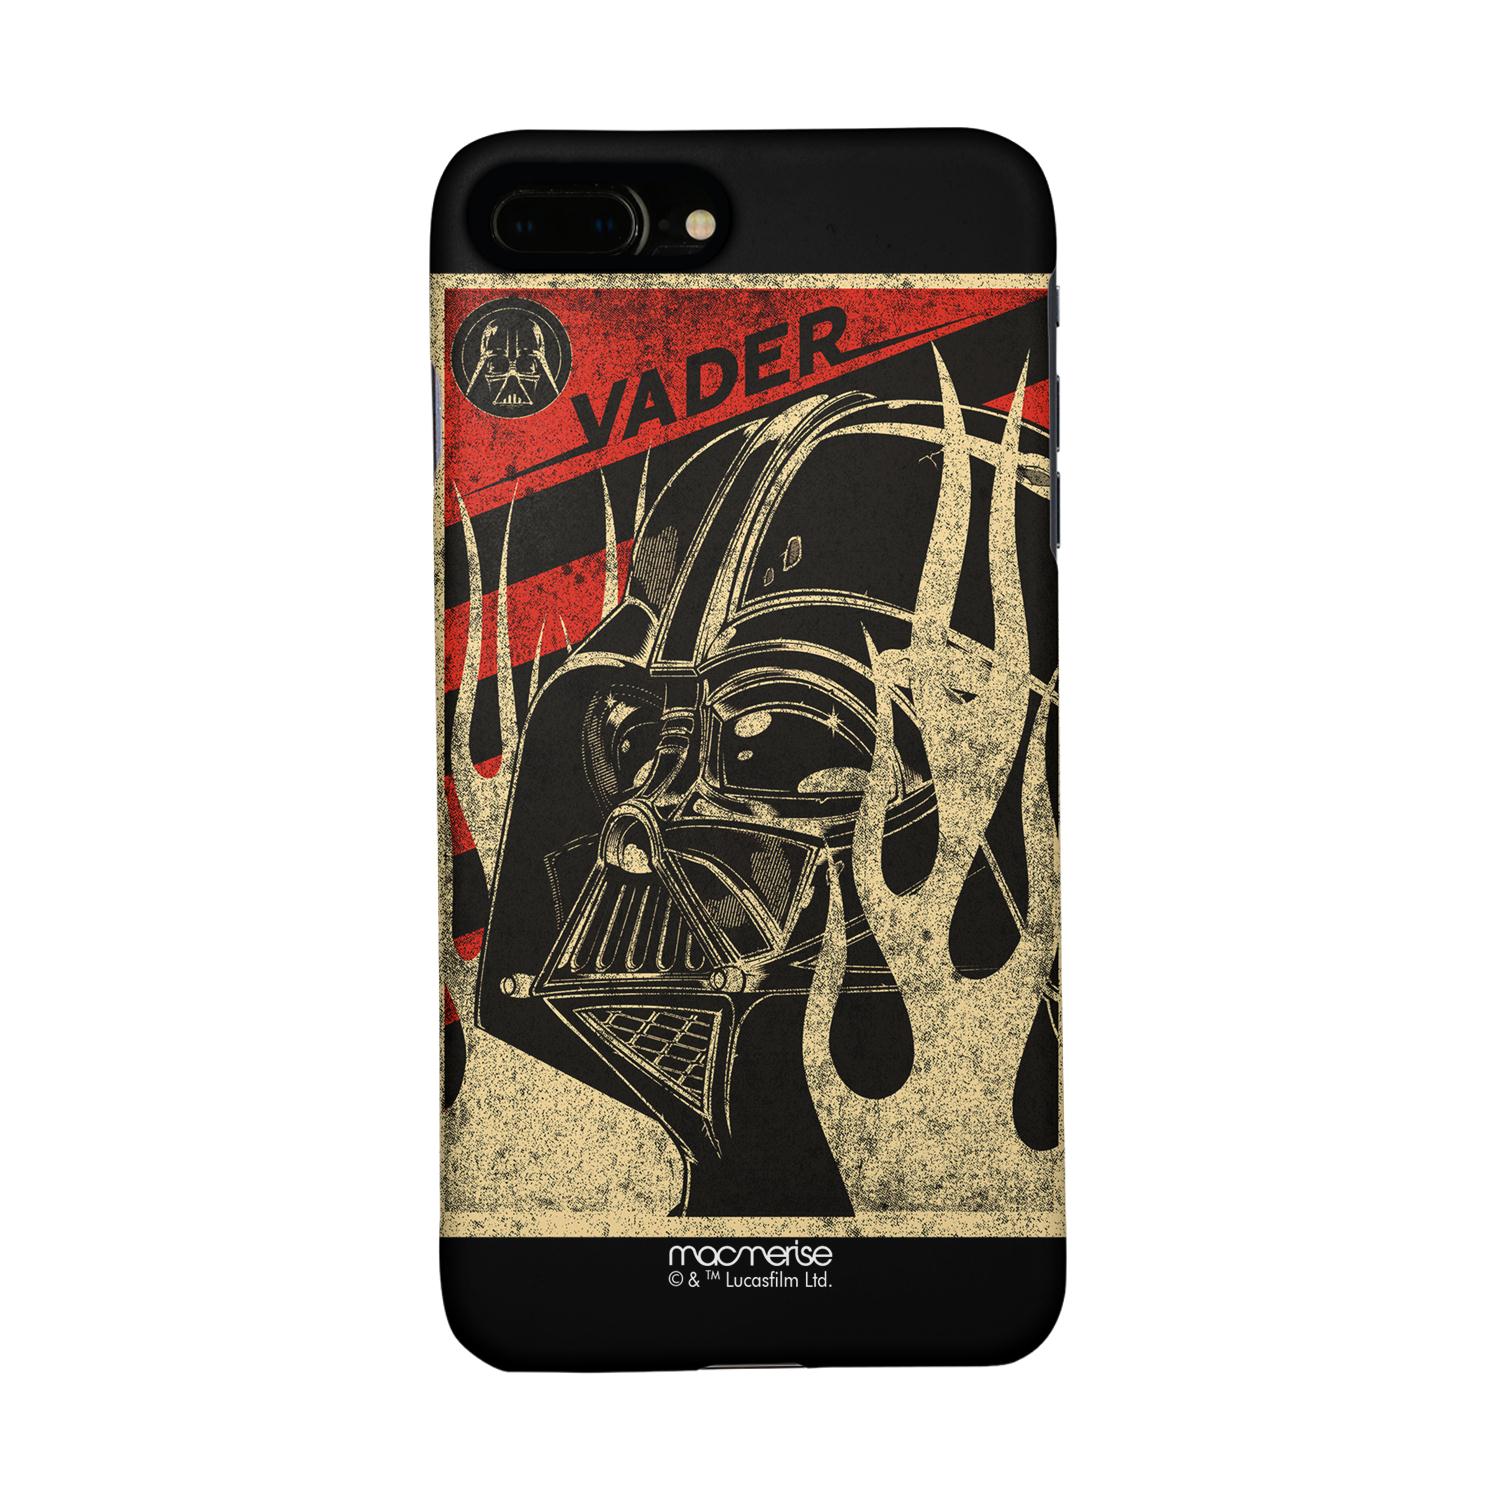 Buy Vader Stamp - Sleek Phone Case for iPhone 7 Plus Online